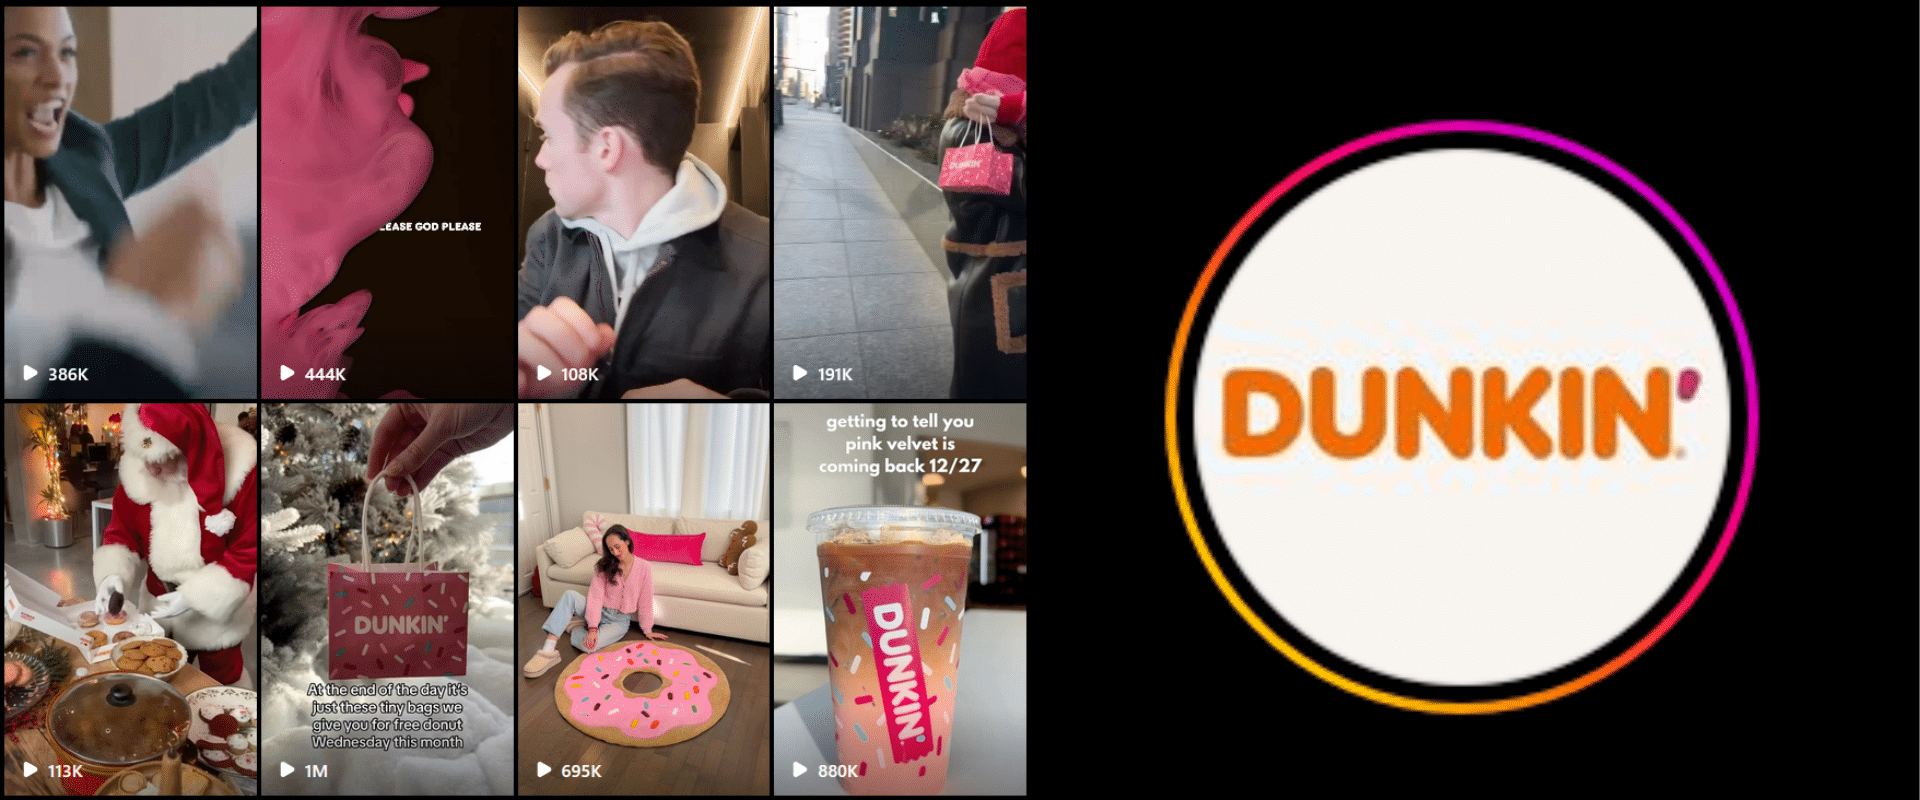 Dunkin' donuts instagram ad.